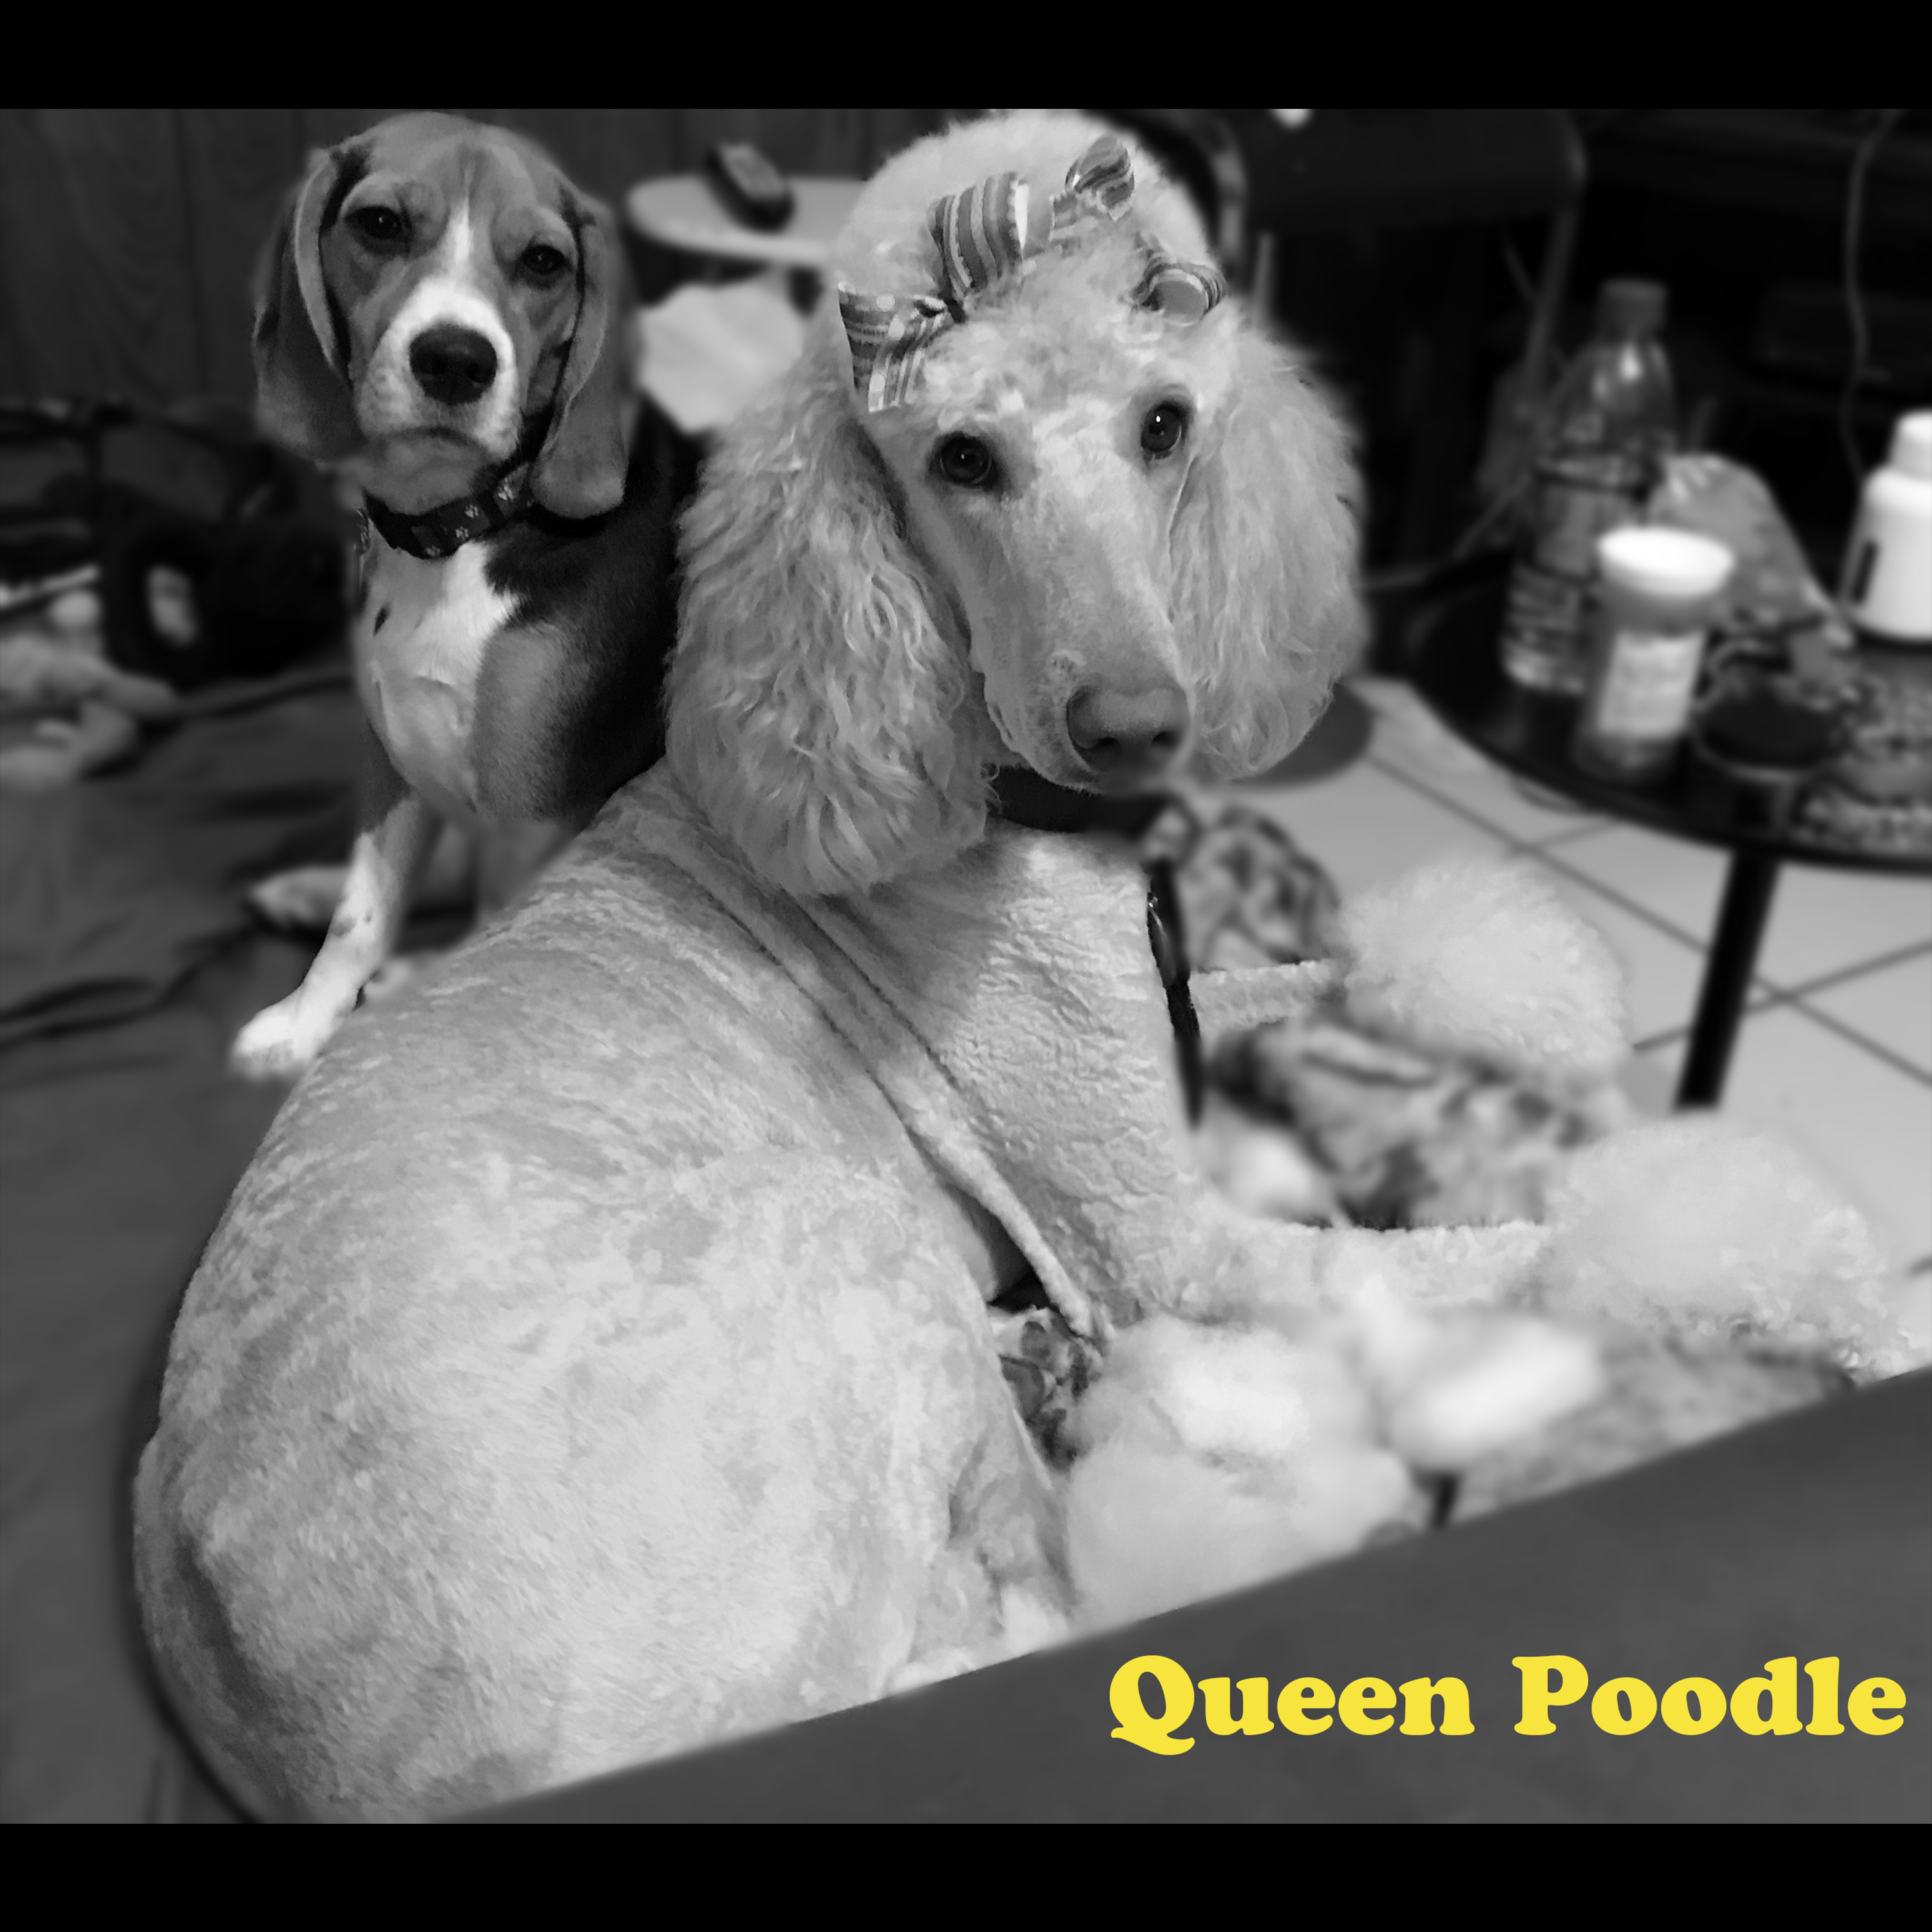 Queen Poodle